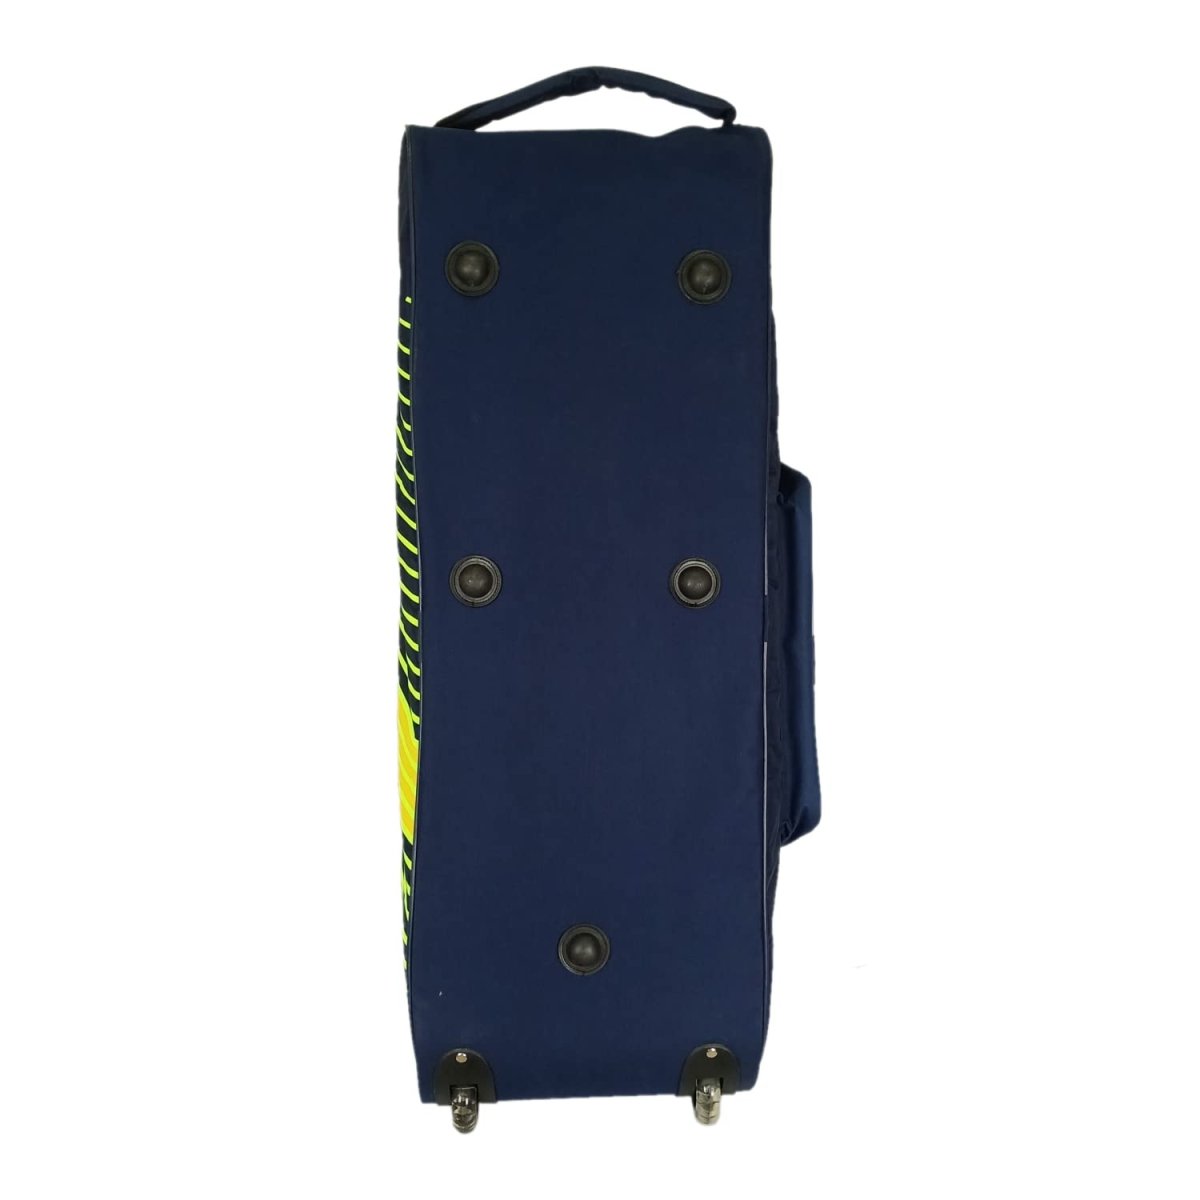 SG Smartpak 1.0 Cricket Wheelie Kit Bag - Acrux Sports